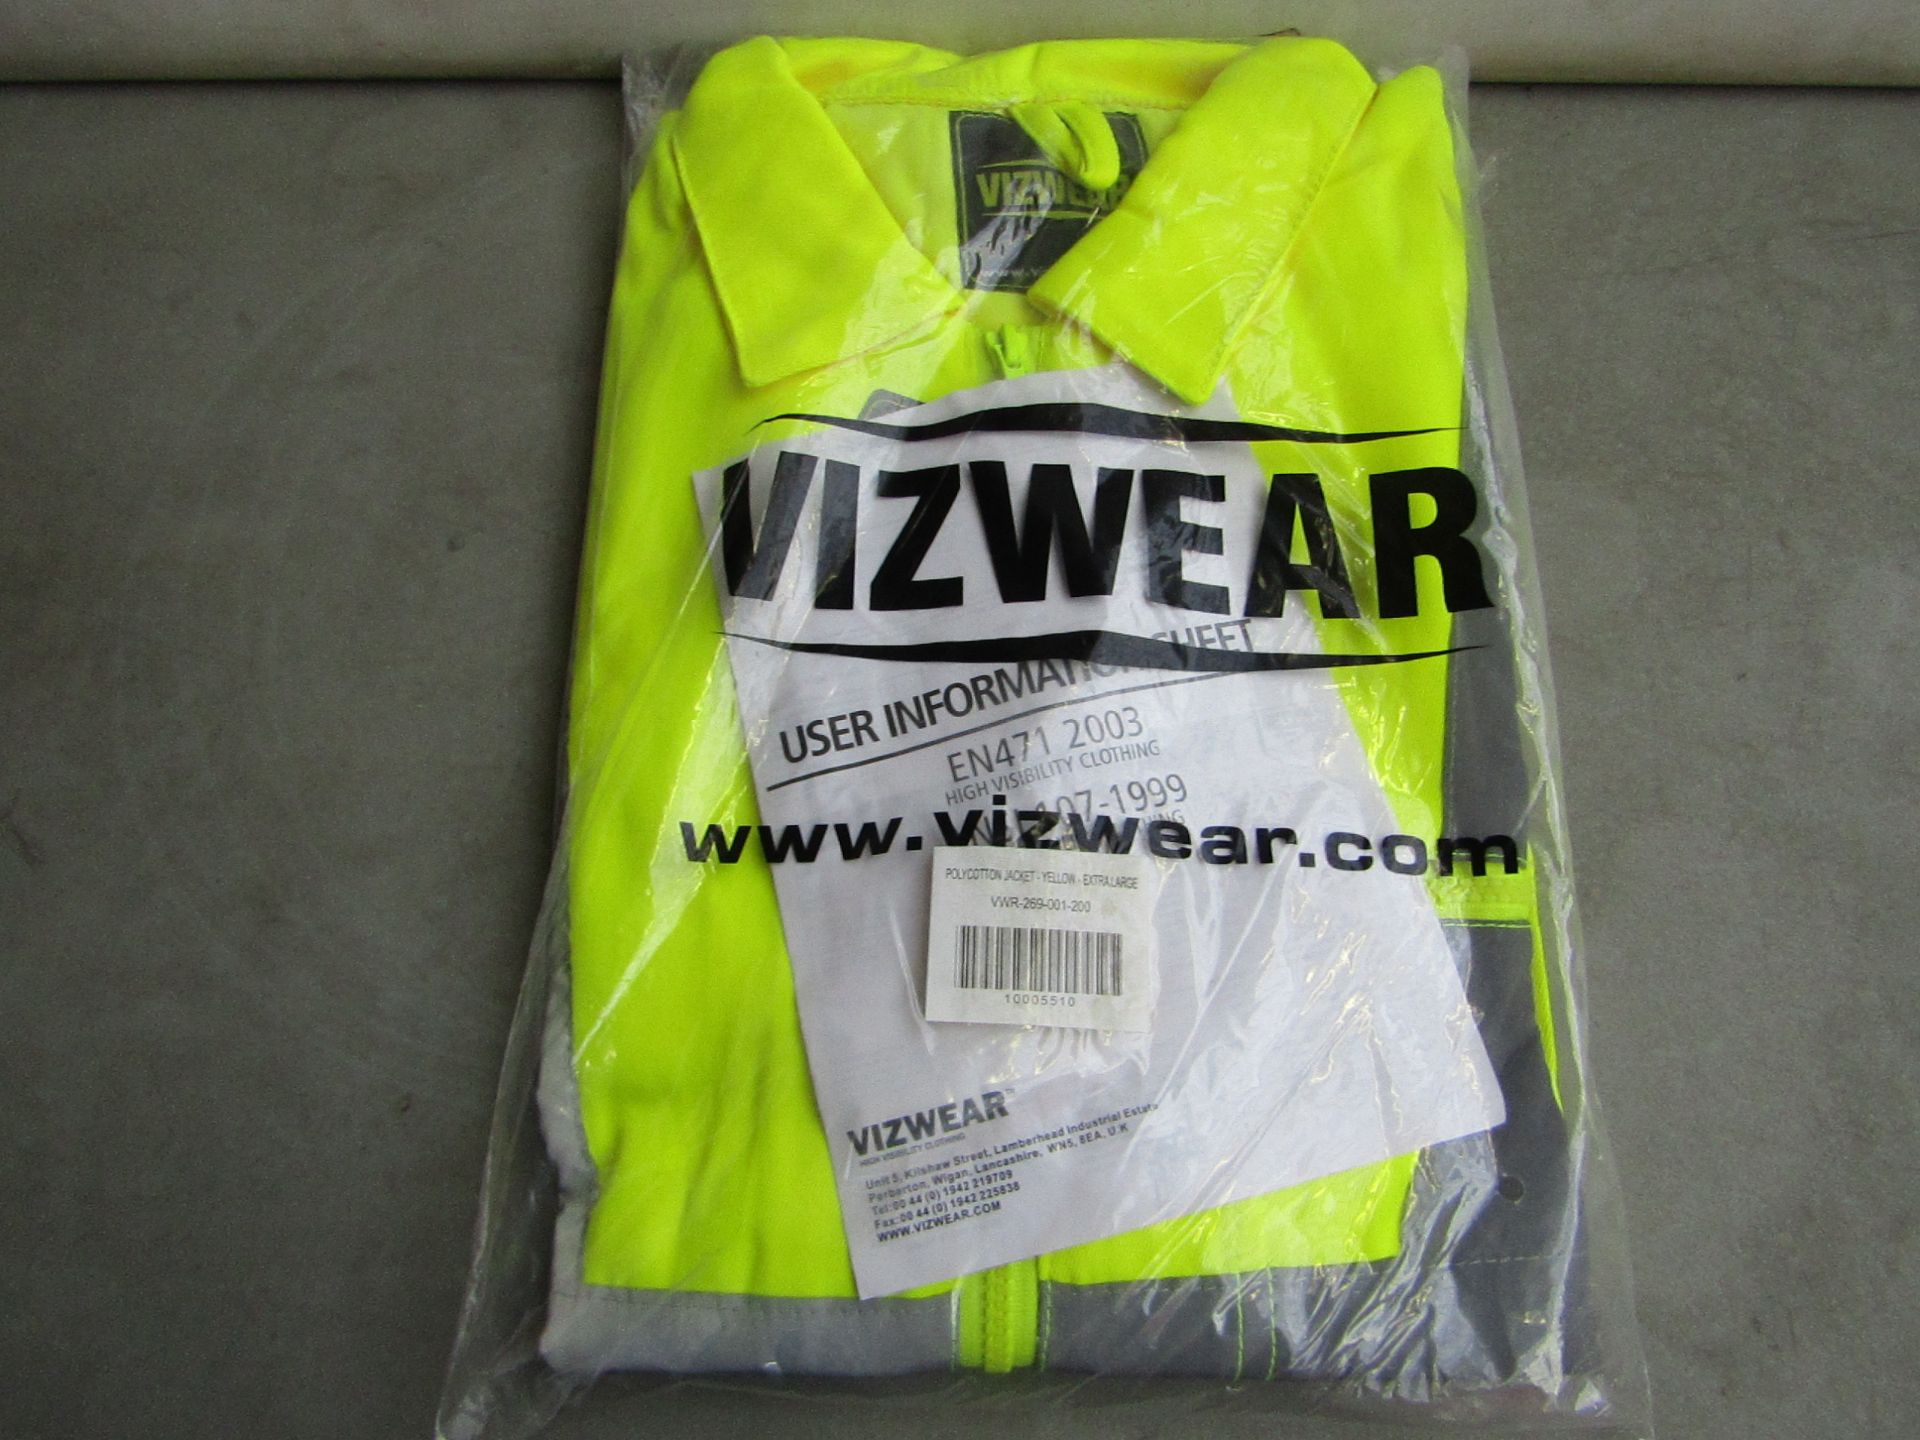 Vizwear - Hi-Vis Yellow Polycotton Jacket - Size XL - Unused & Packaged.